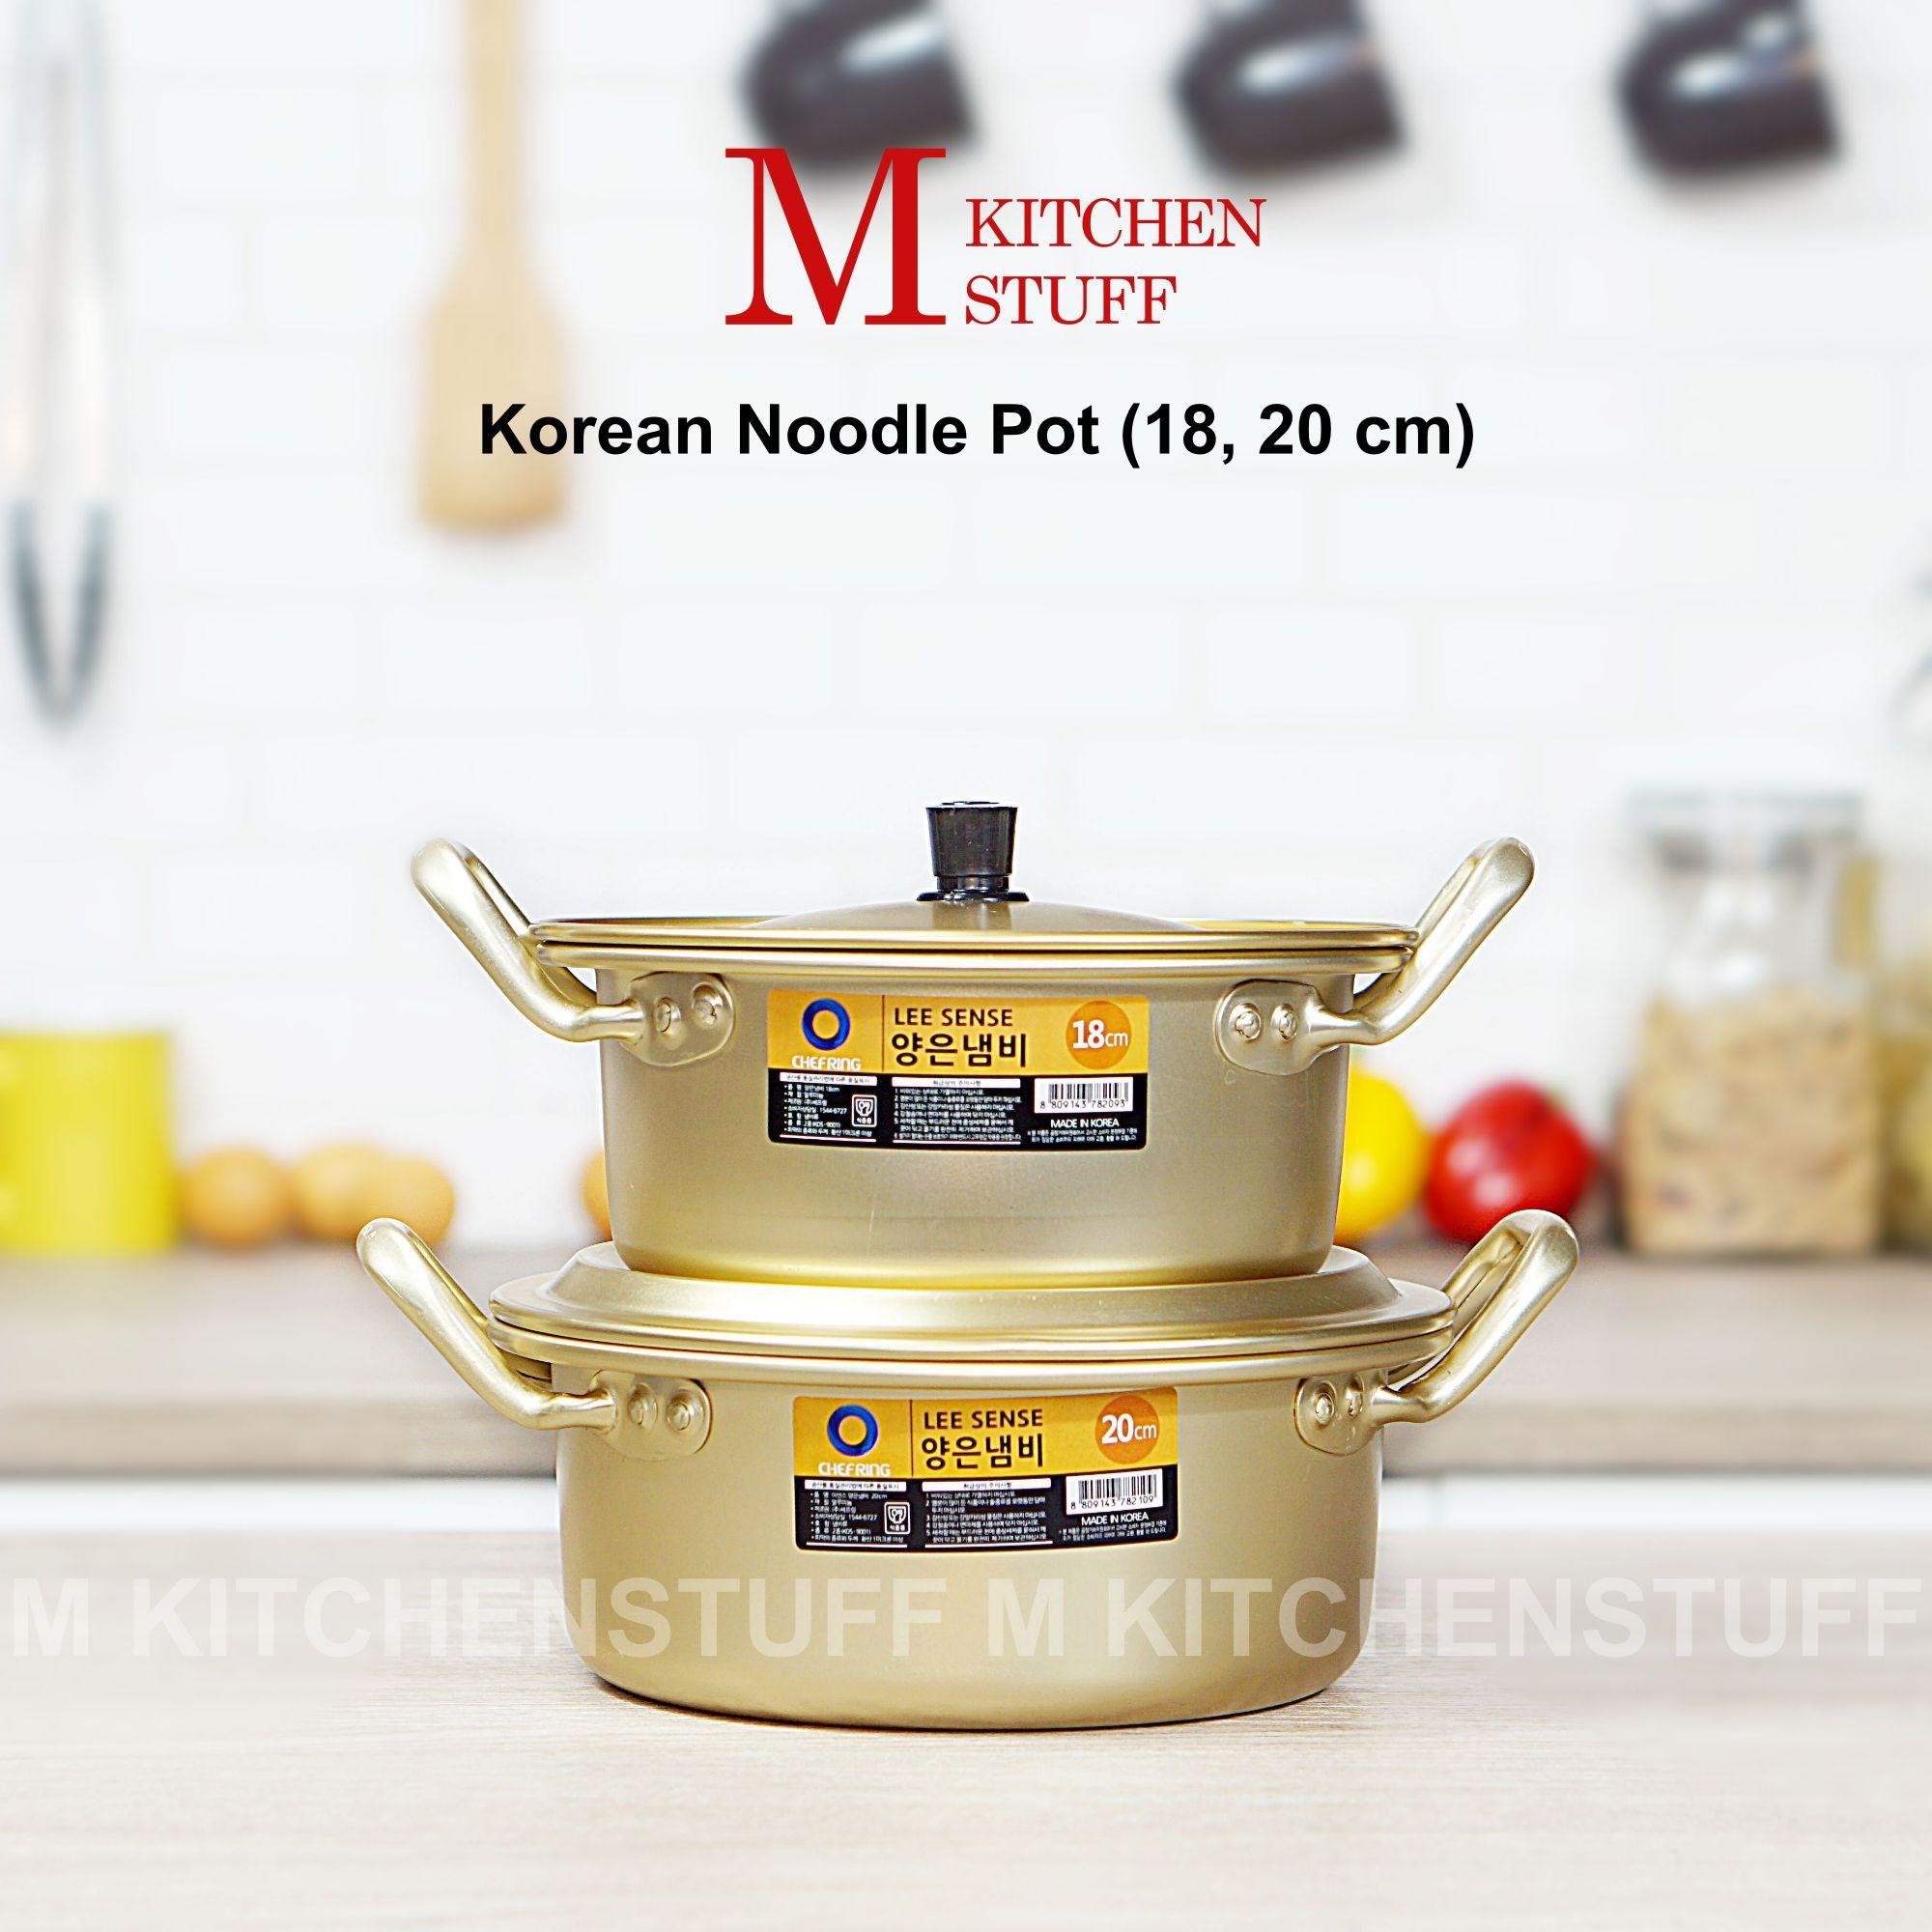 M Kitchenstuff หม้อ หม้อเกาหลี Korean Noodle pot ผลิตจากประเทศเกาหลี (ใหม่)